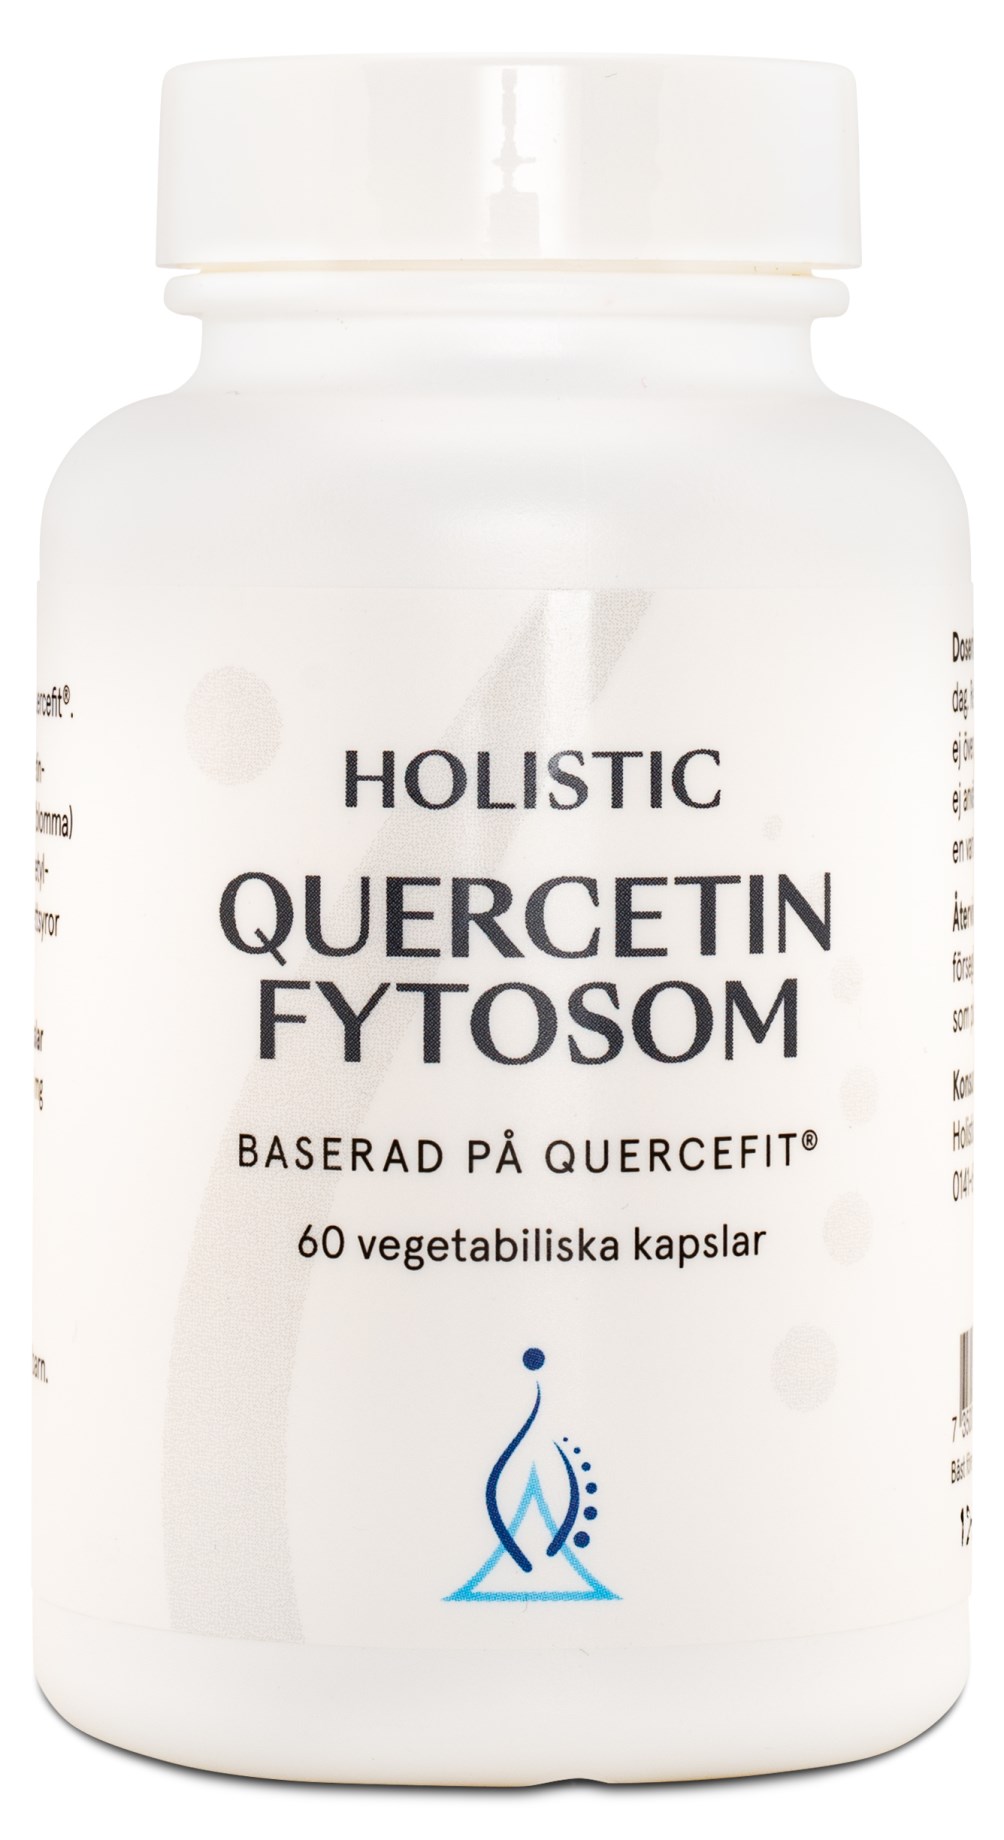 Holistic Quercetin Fytosom